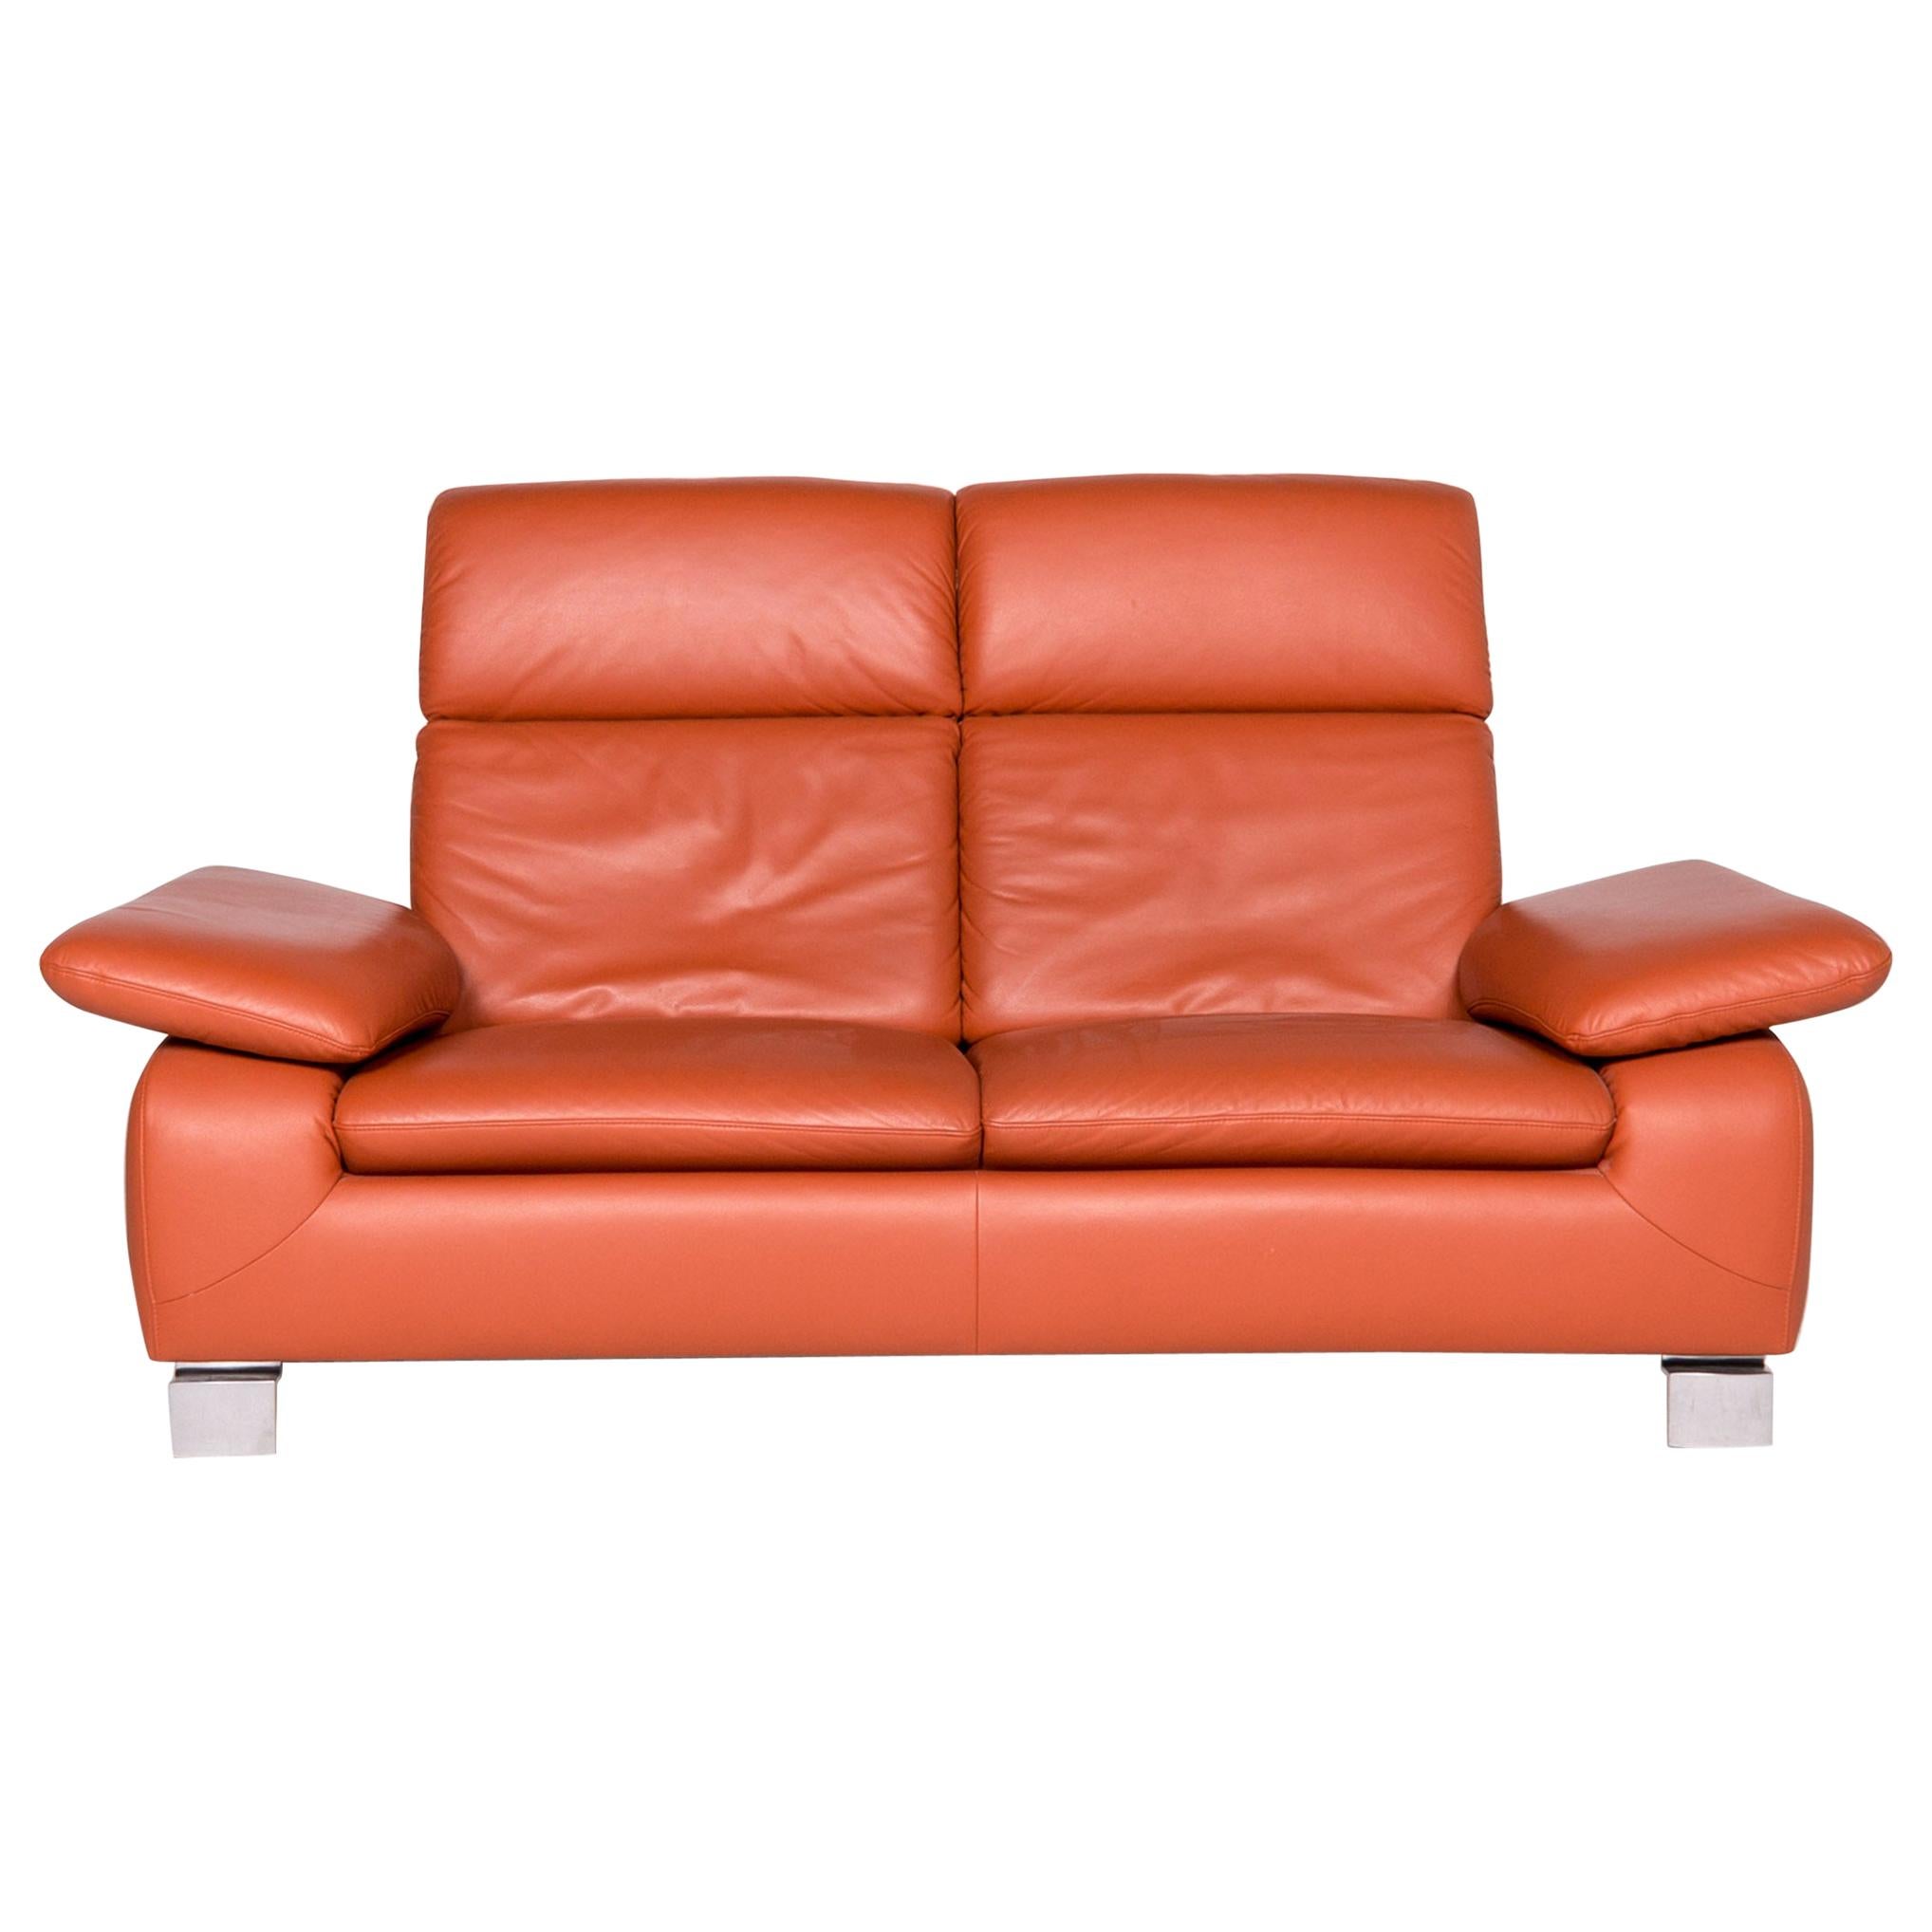 Ewald Schillig Designer Leather Sofa Orange Two-Seat Couch For Sale